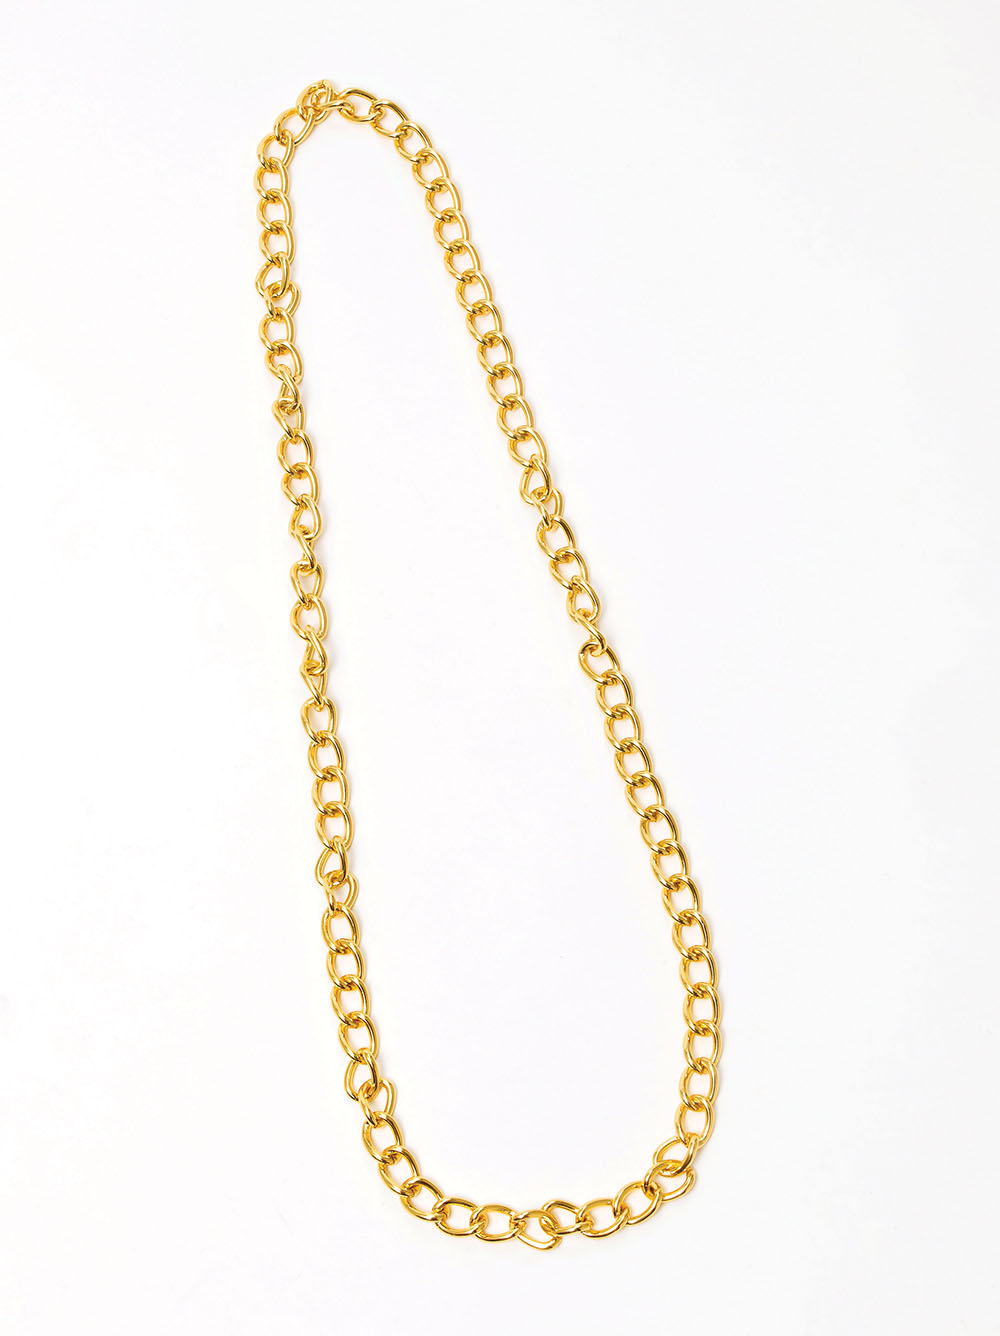 Gold Chain 100cm